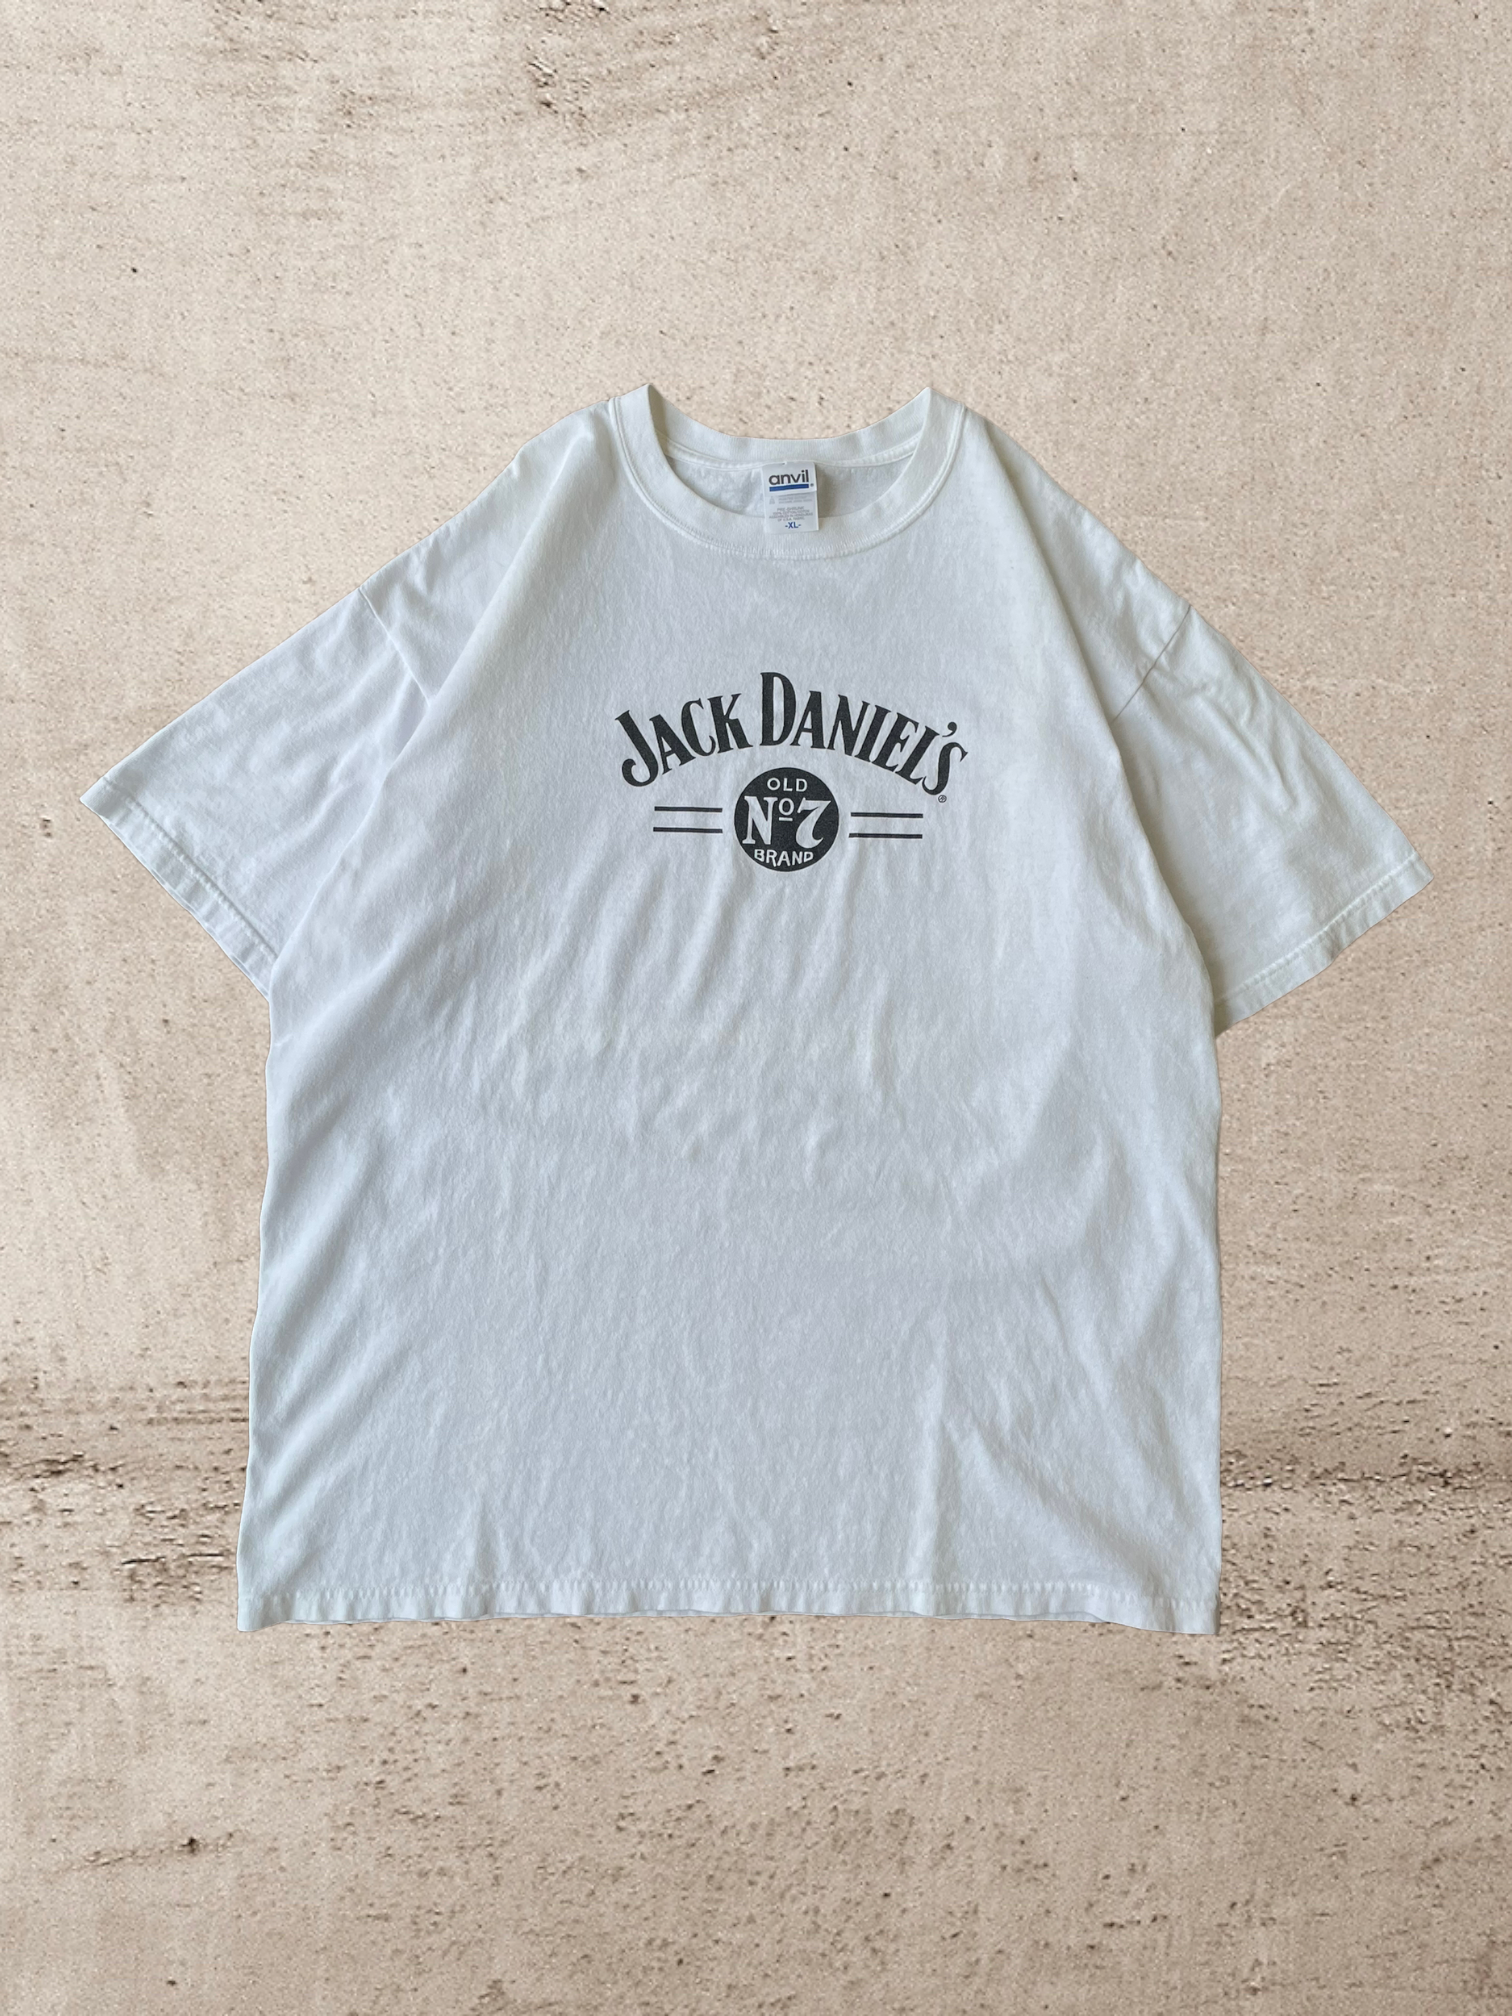 Vintage Jack Daniels T-Shirt - XL